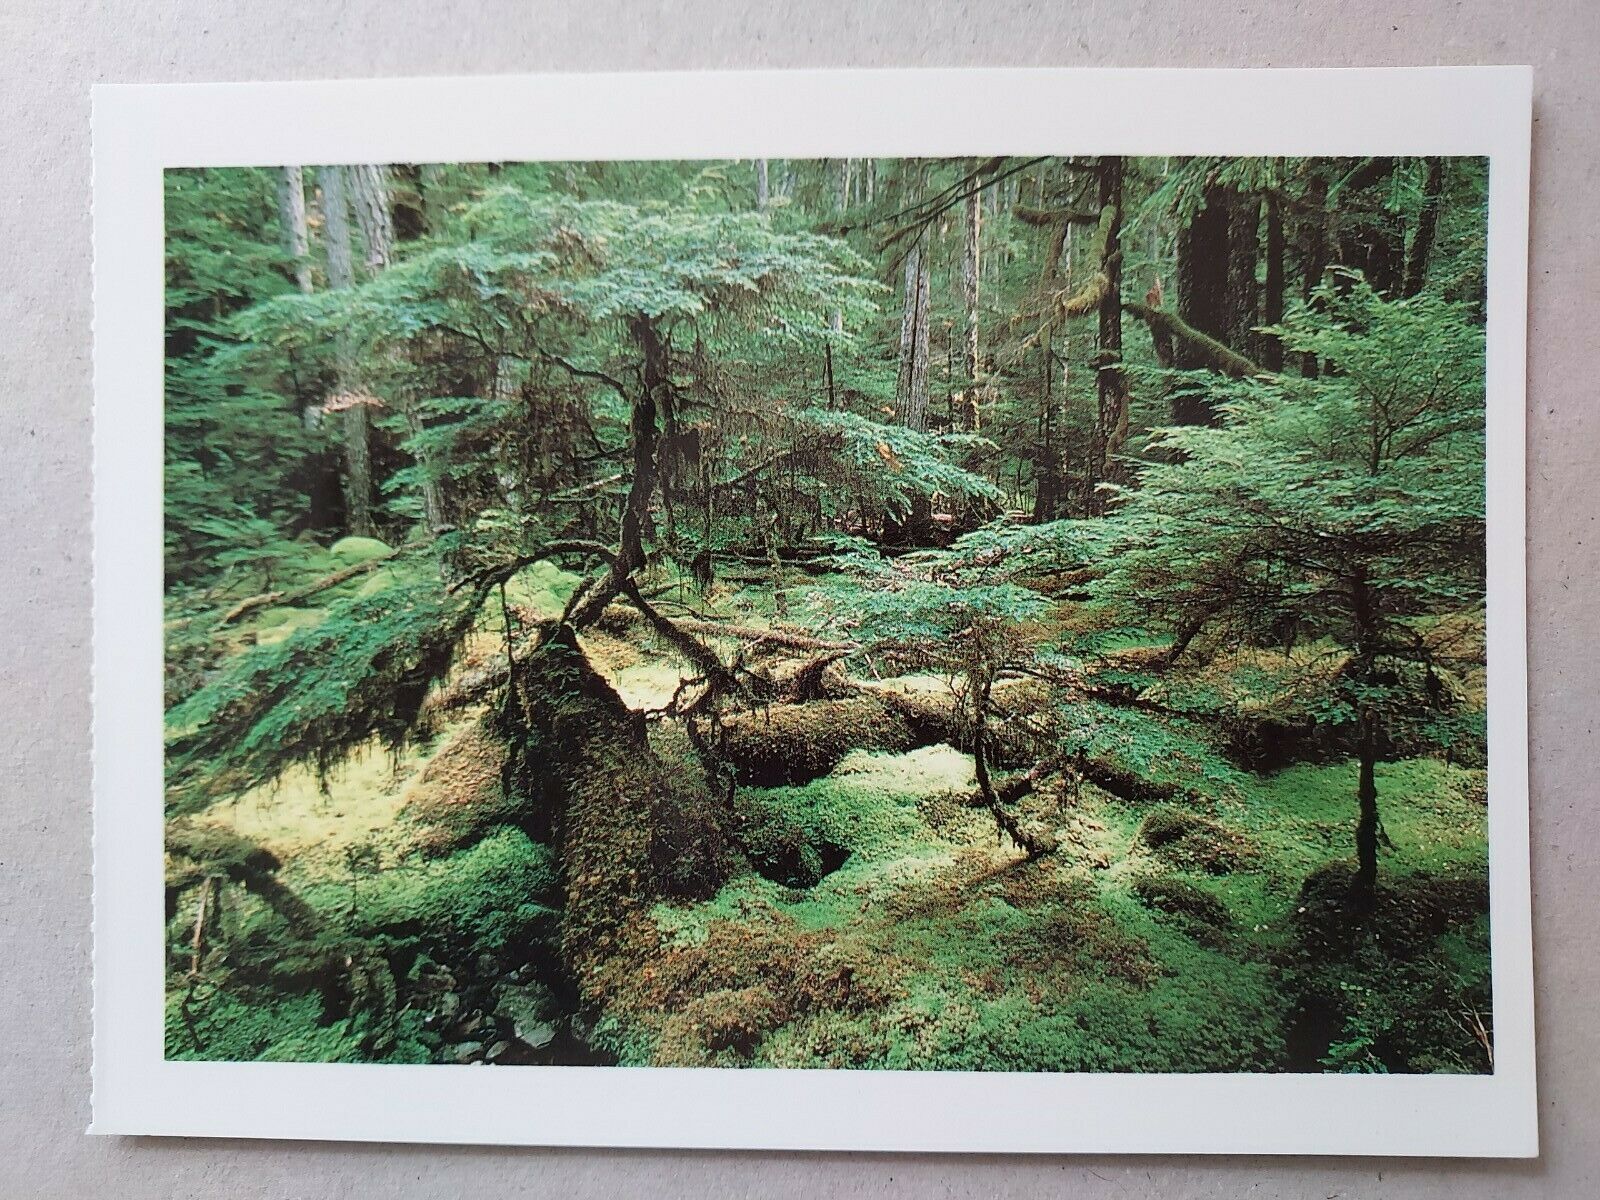 Us Rain Forest In Brother Island 1989 Photo Postcard Alaska , New